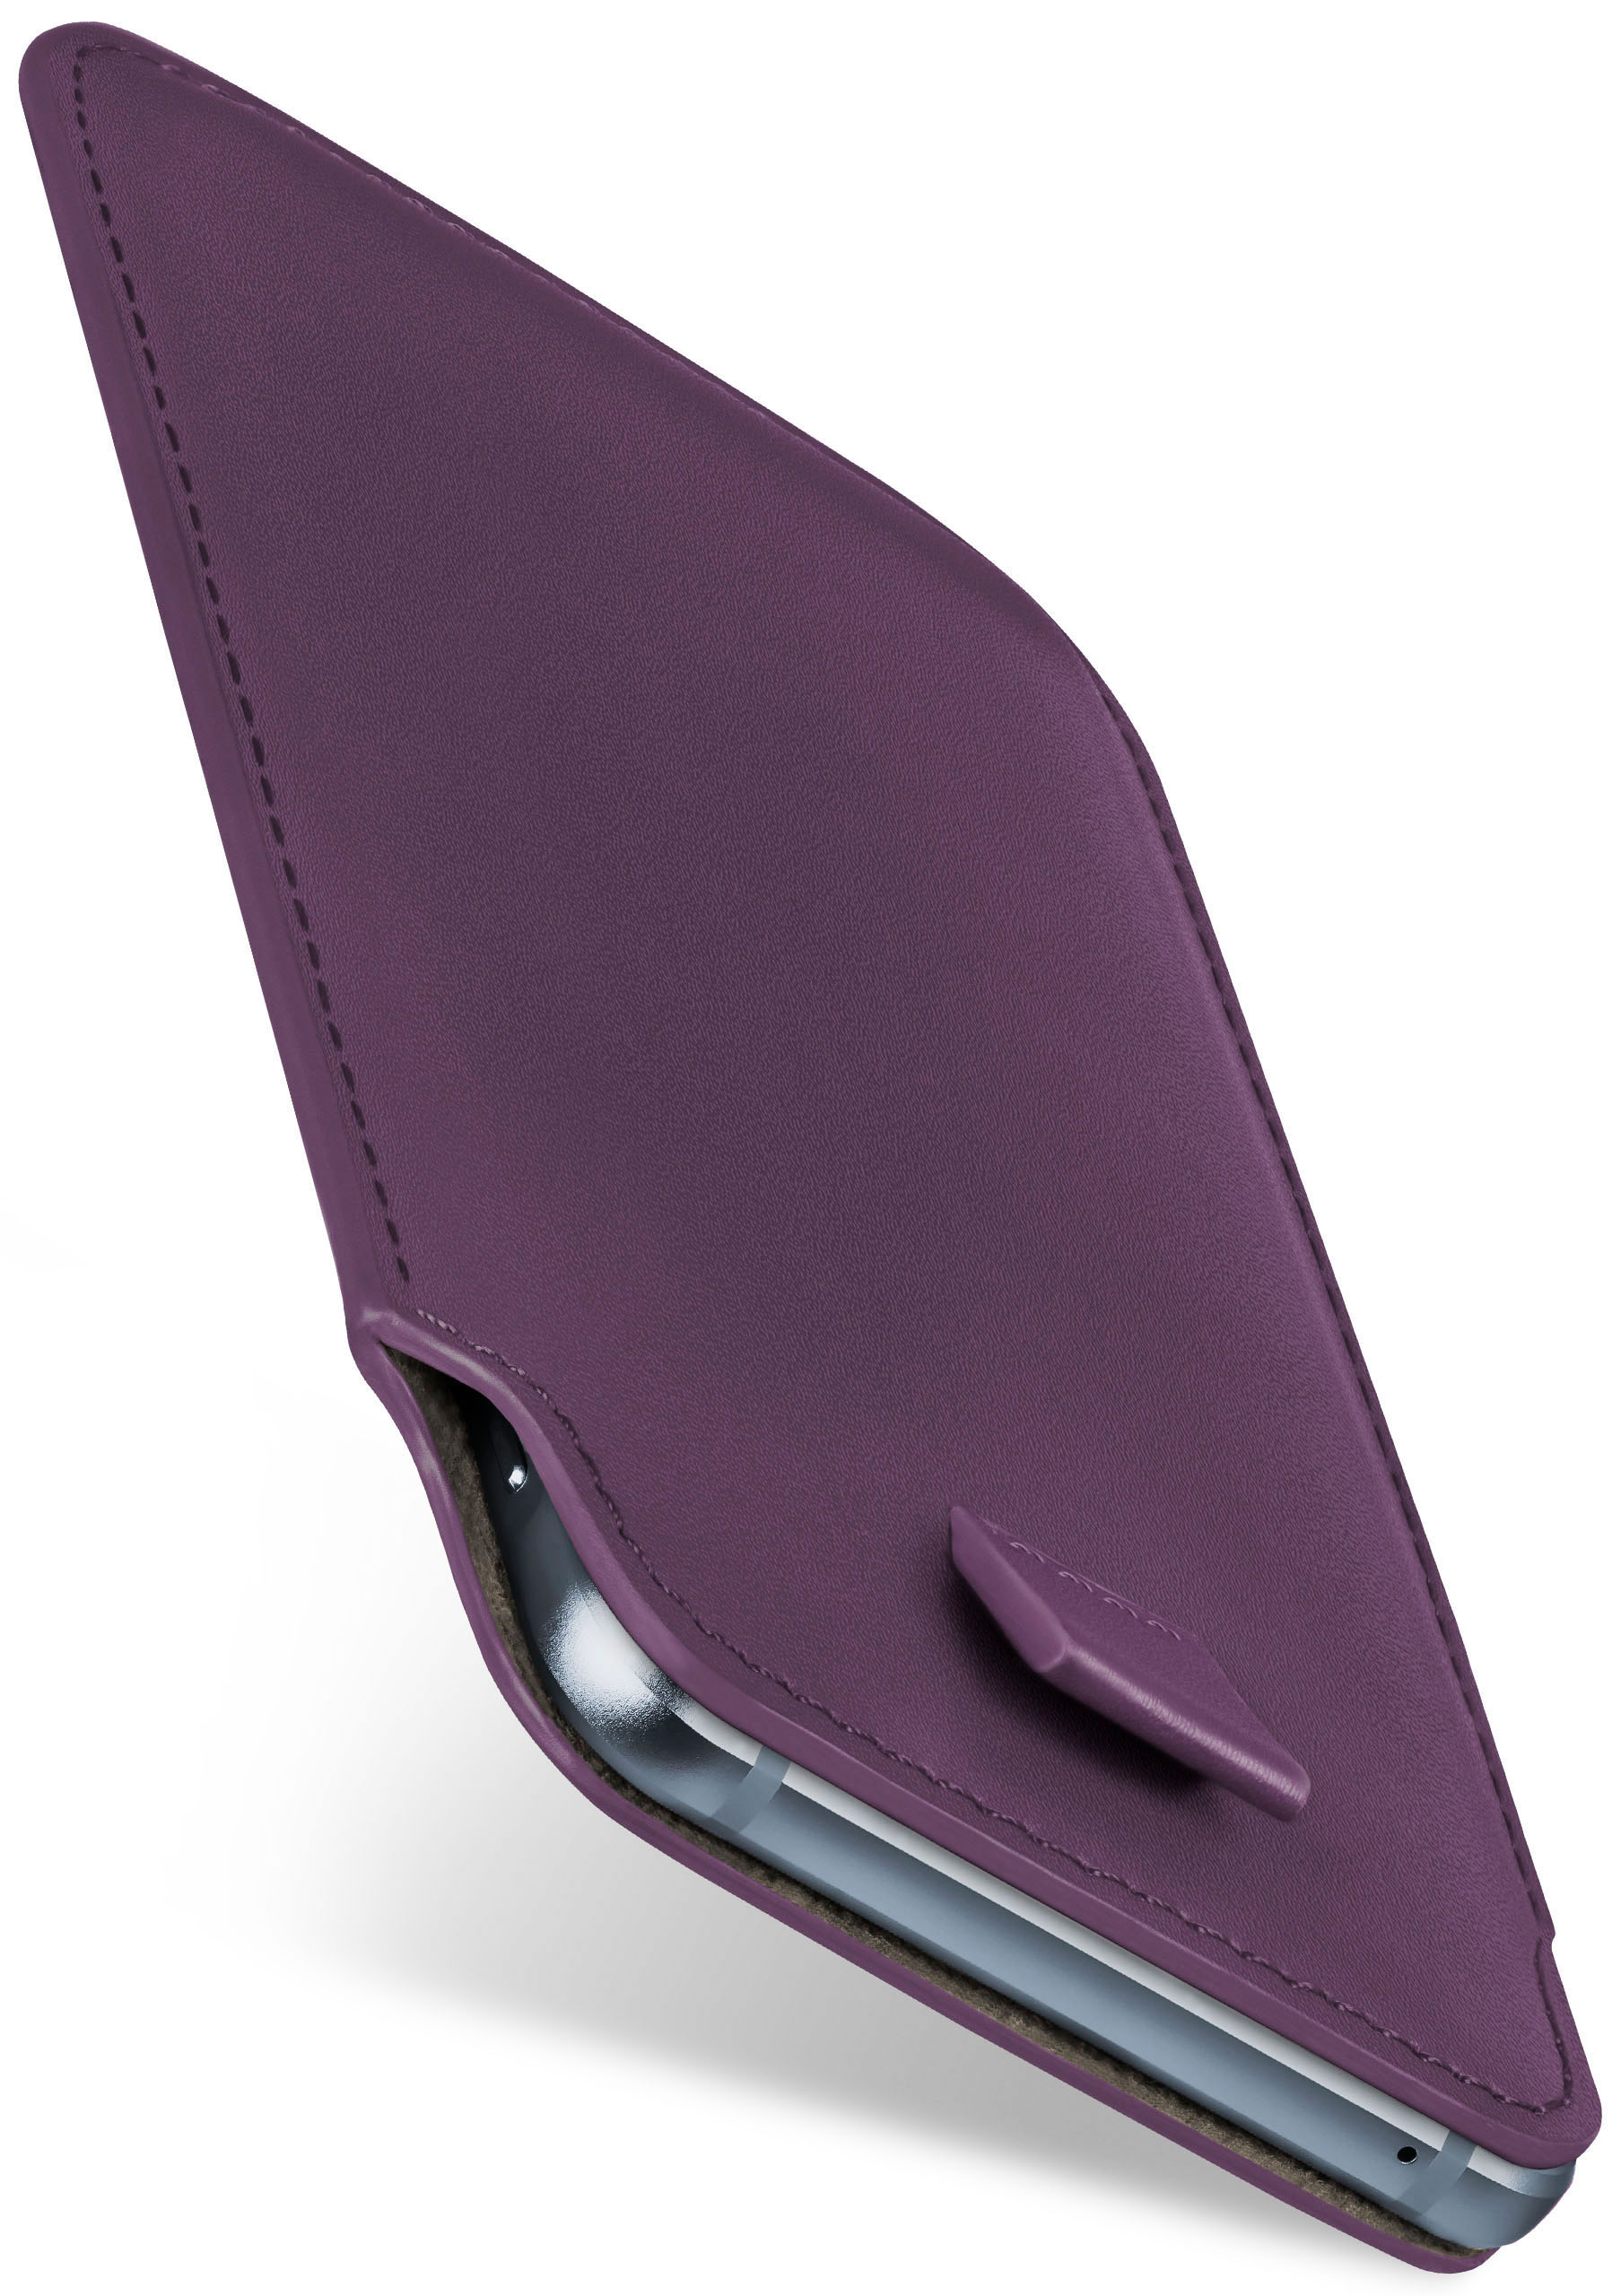 MOEX Slide Full Case, Emporia, Eco, Cover, Indigo-Violet